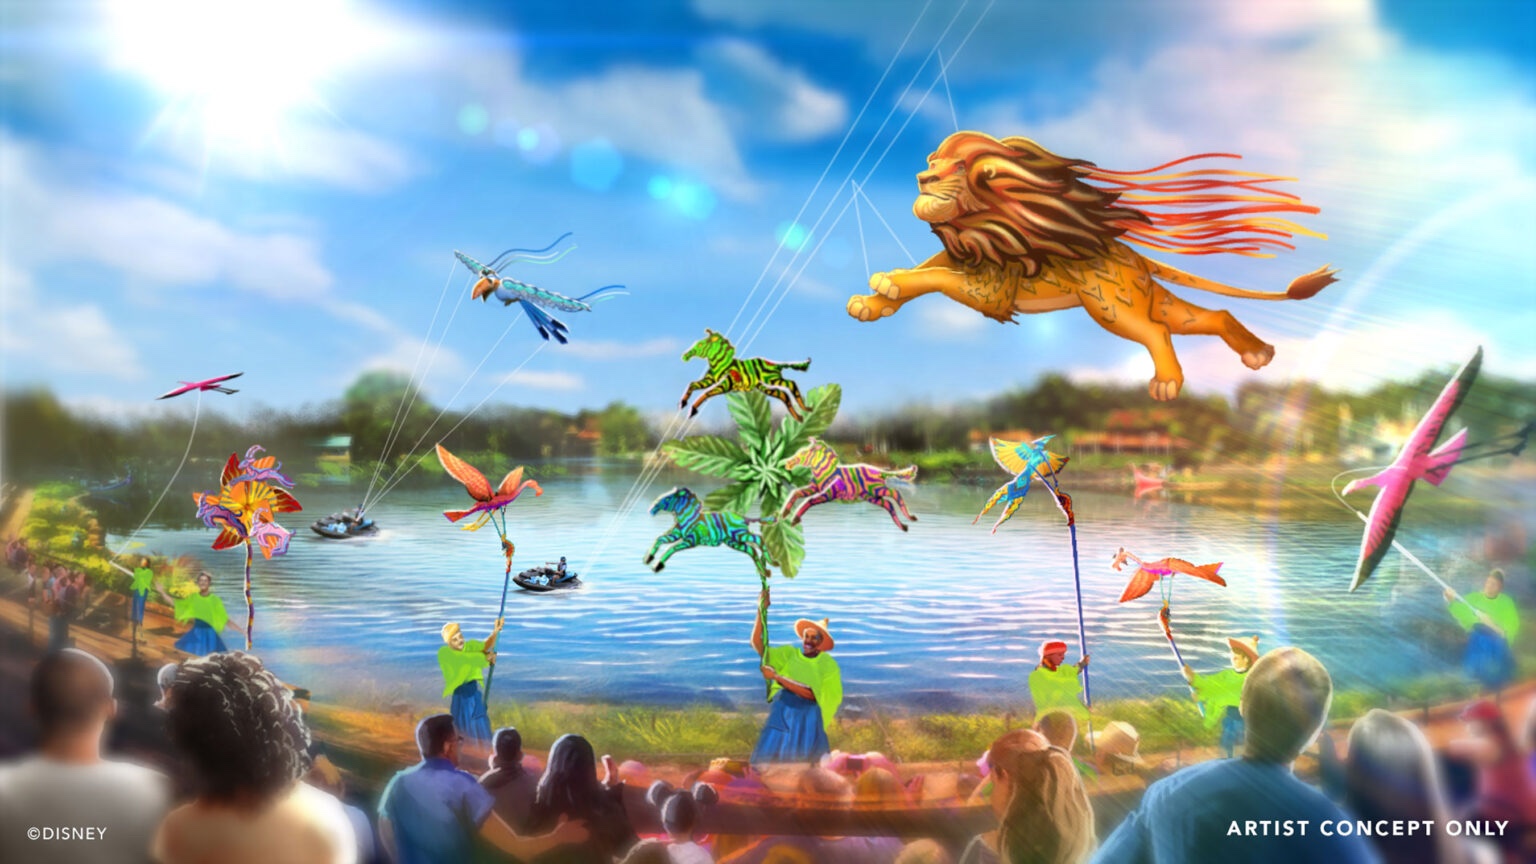 “Disney KiteTails” Daytime River Show Coming to Disney’s Animal Kingdom